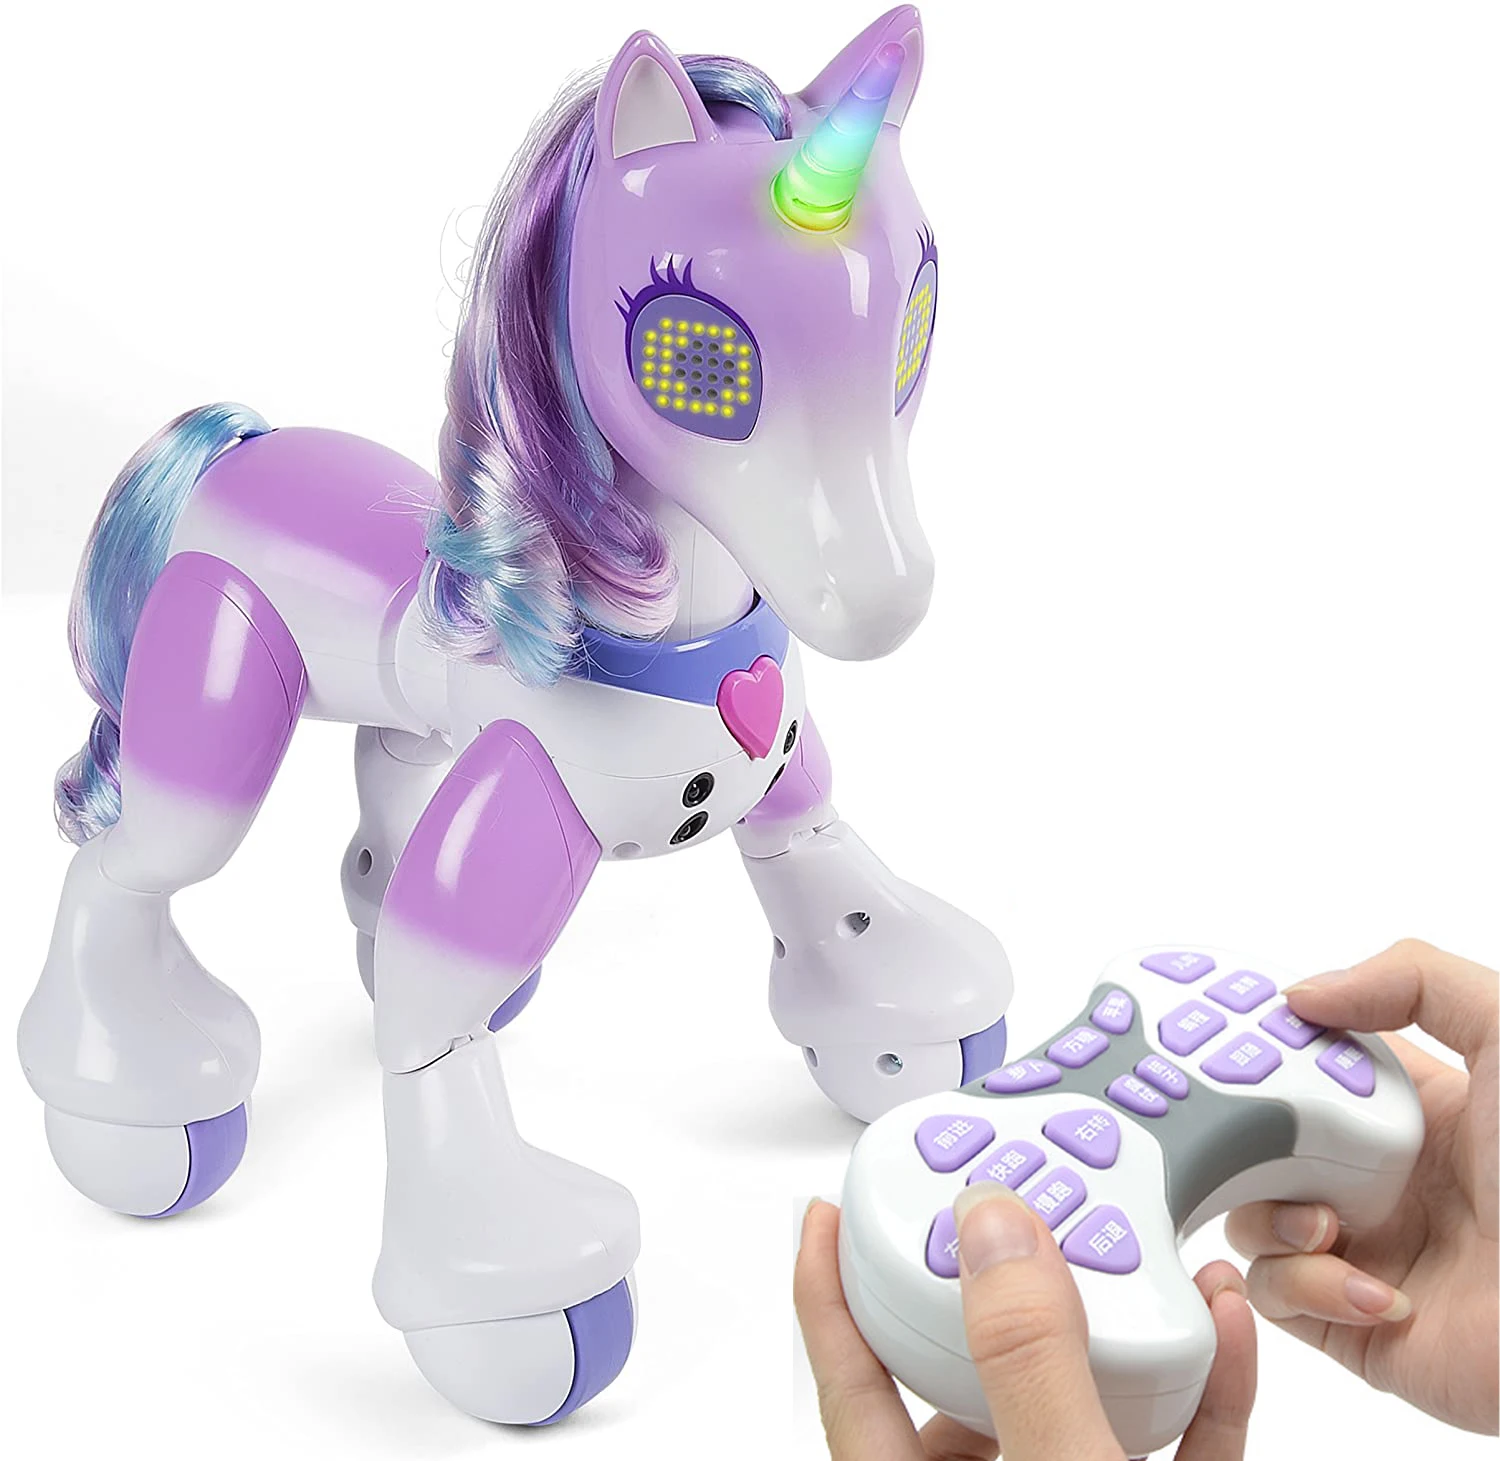 Zoomer Enchanted Unicorn Interactive Toy Electronic Pet Show Pony Toys for Girls Smart Robot Unicorn Talking Toy Horse Dancing